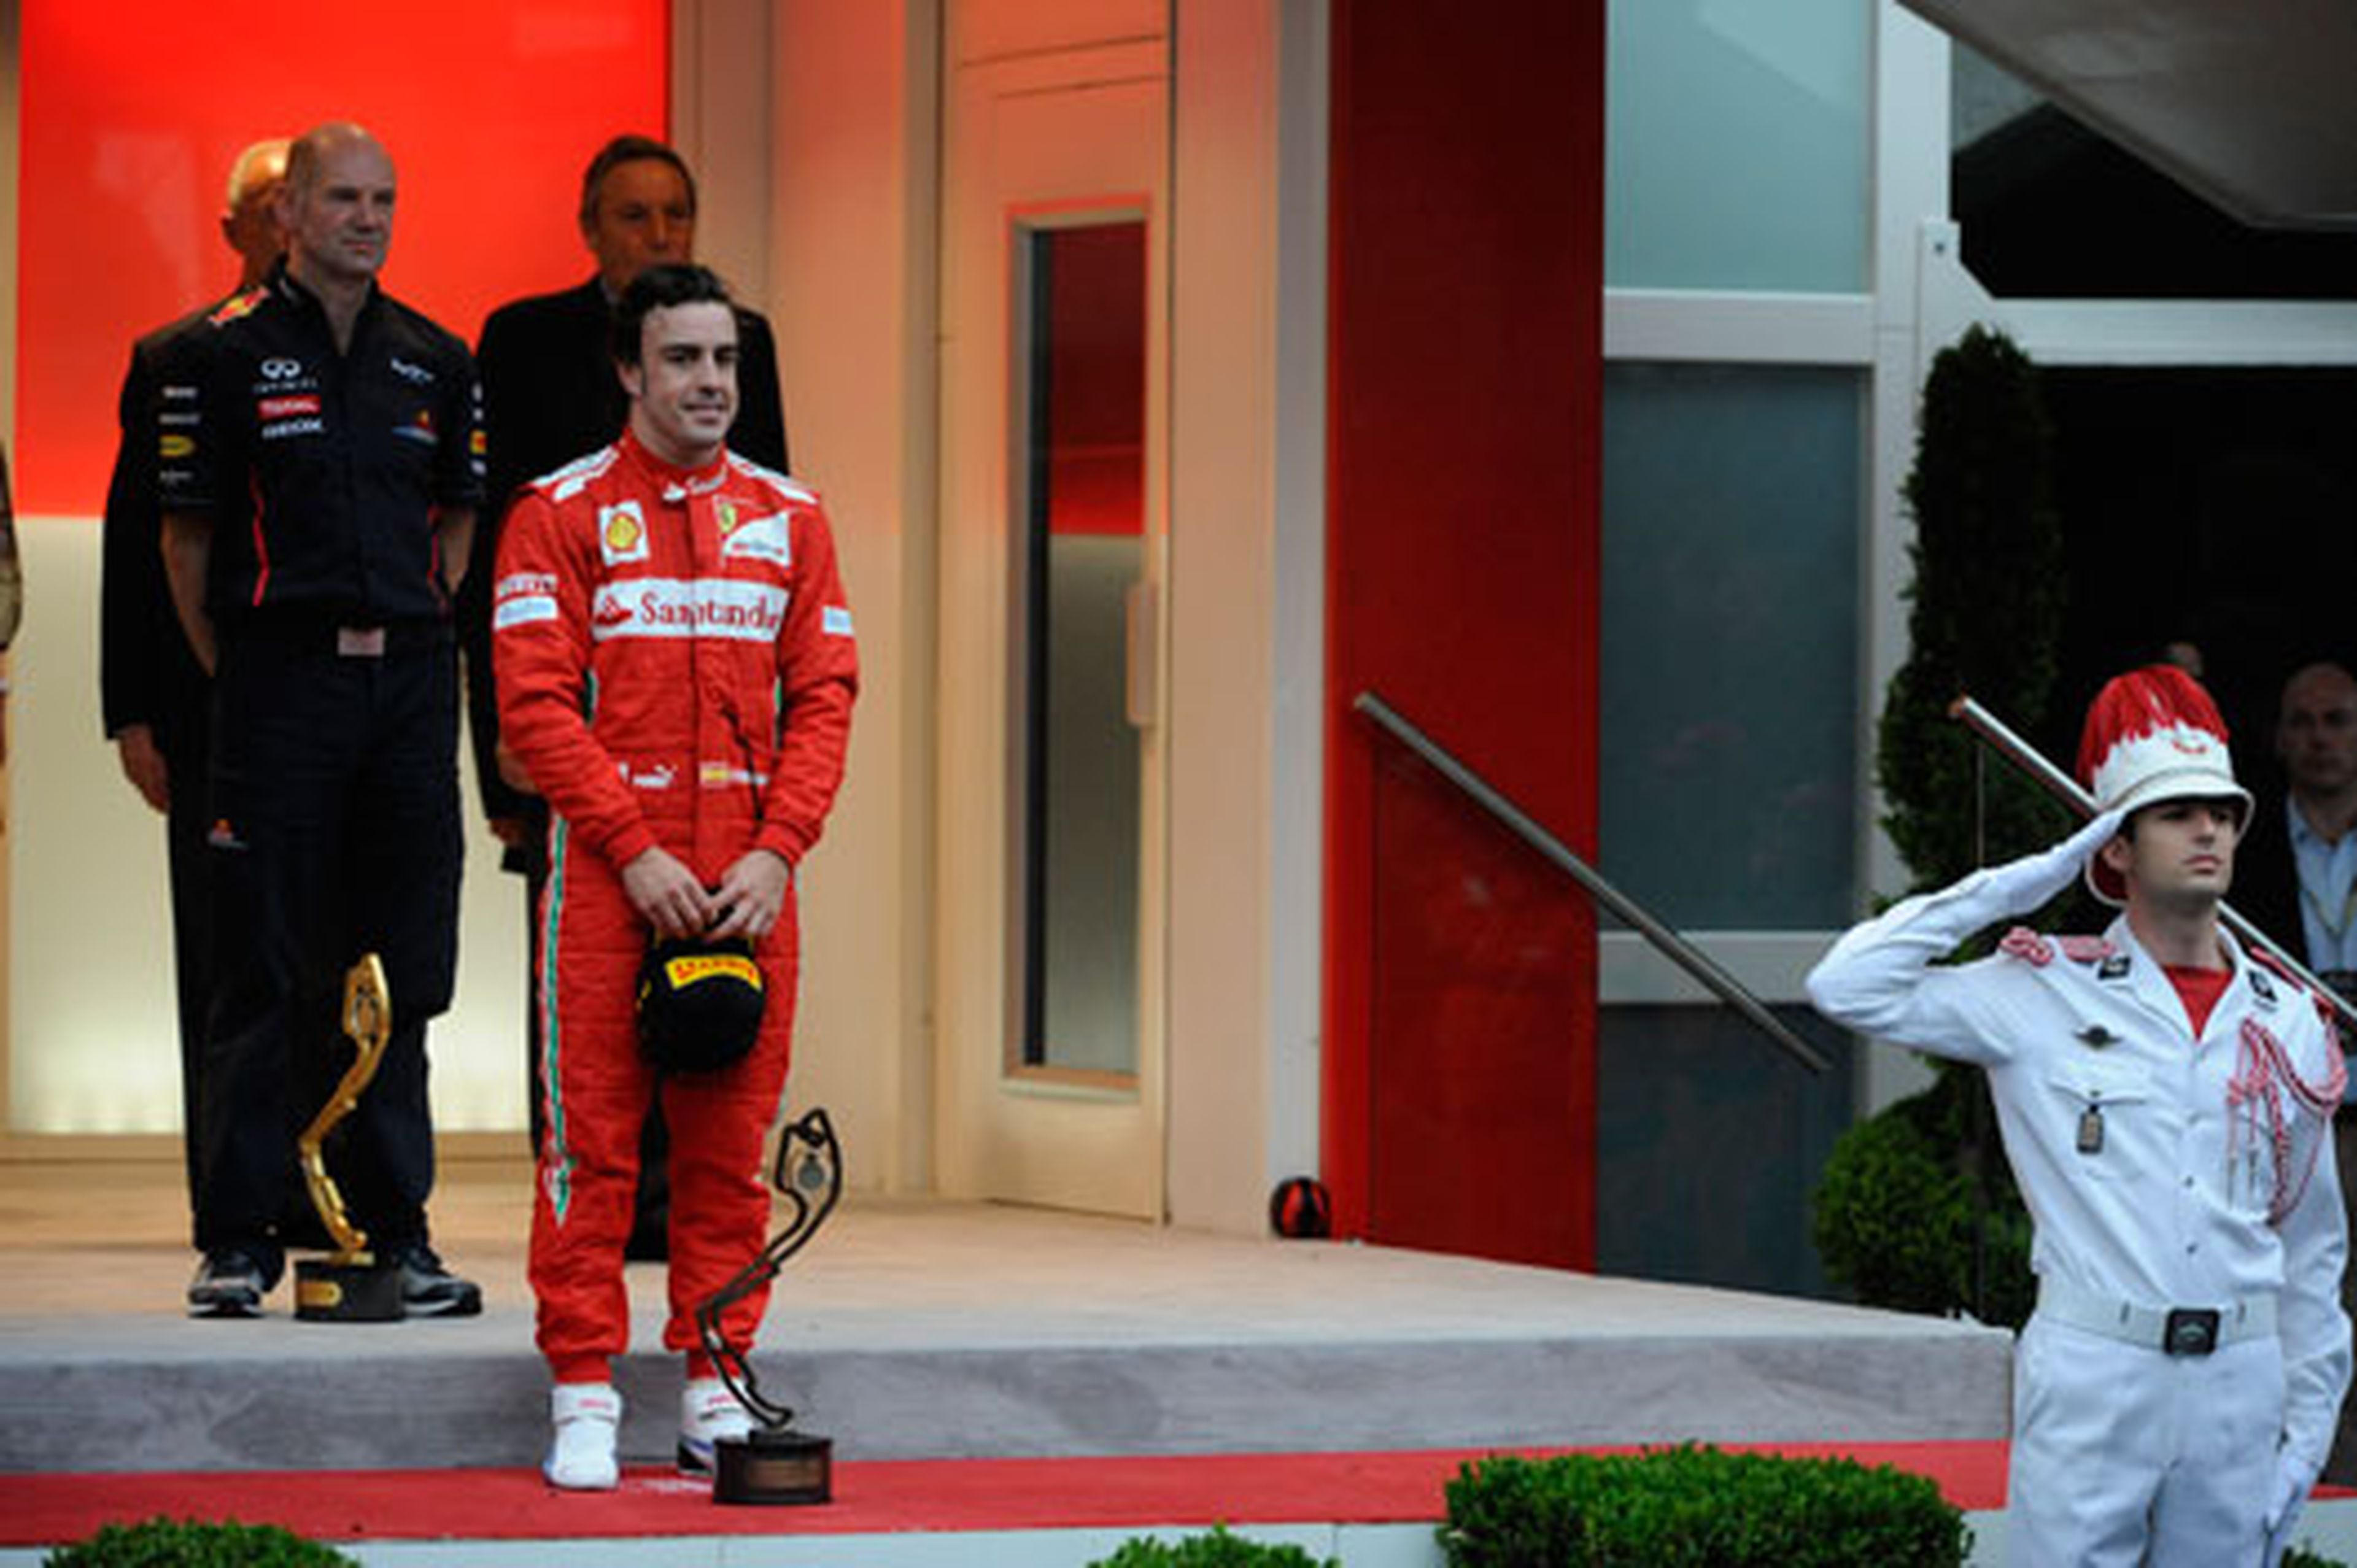 Fernando Alonso - Ferrari - GP Monaco